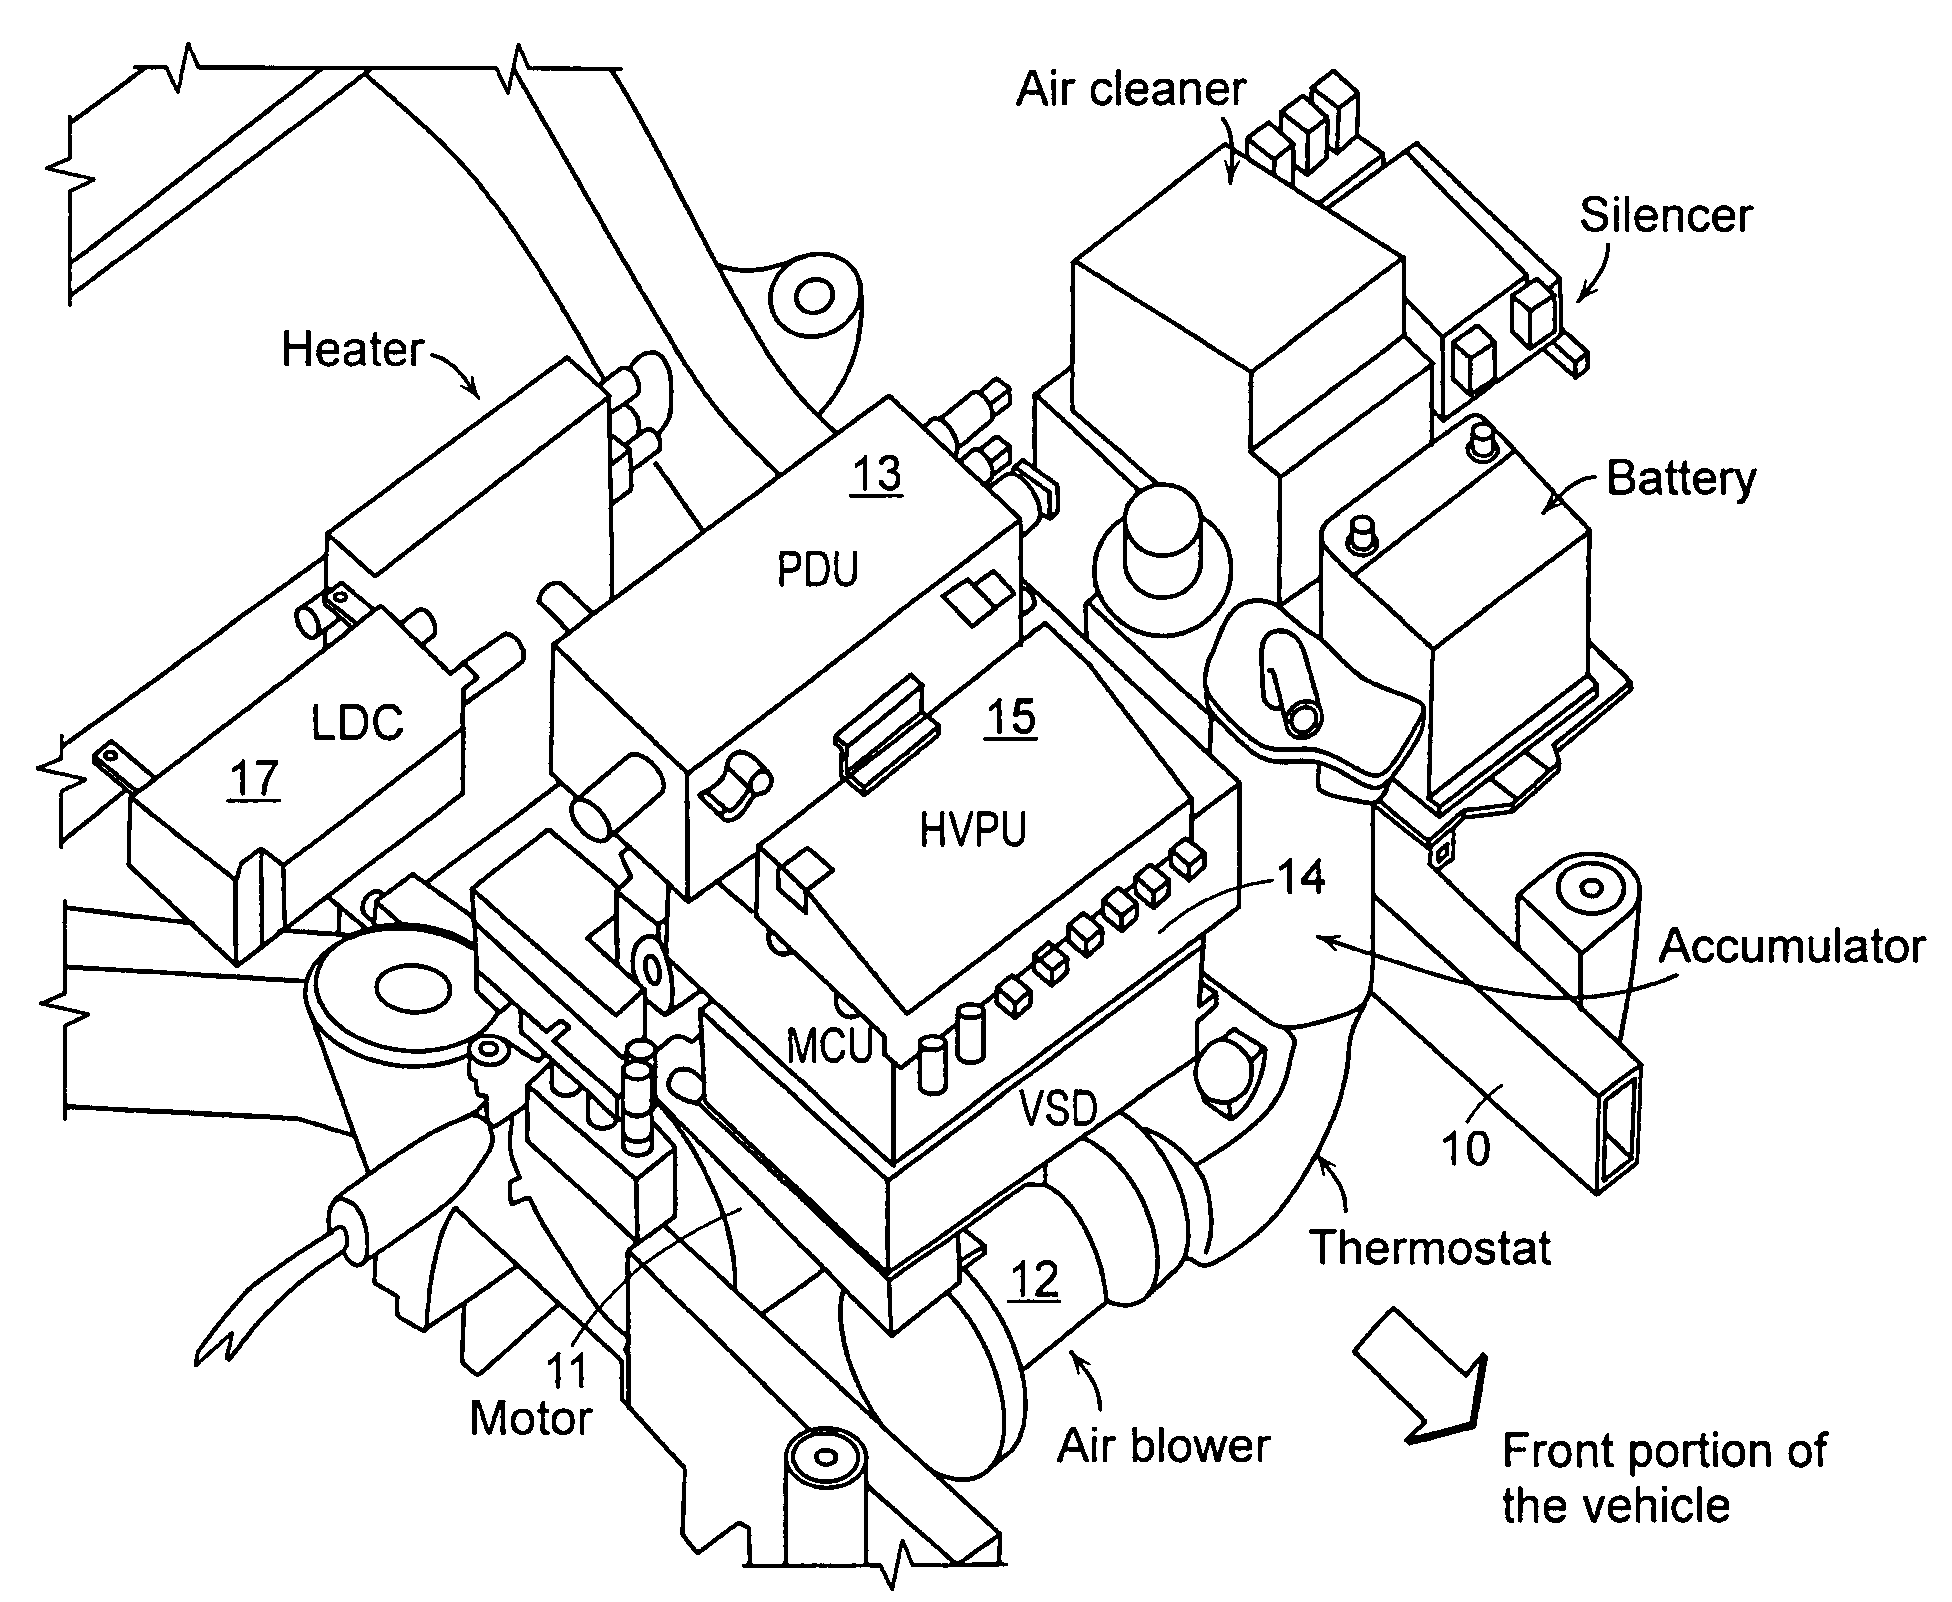 Arrangement structure of component parts for fuel cell vehicle